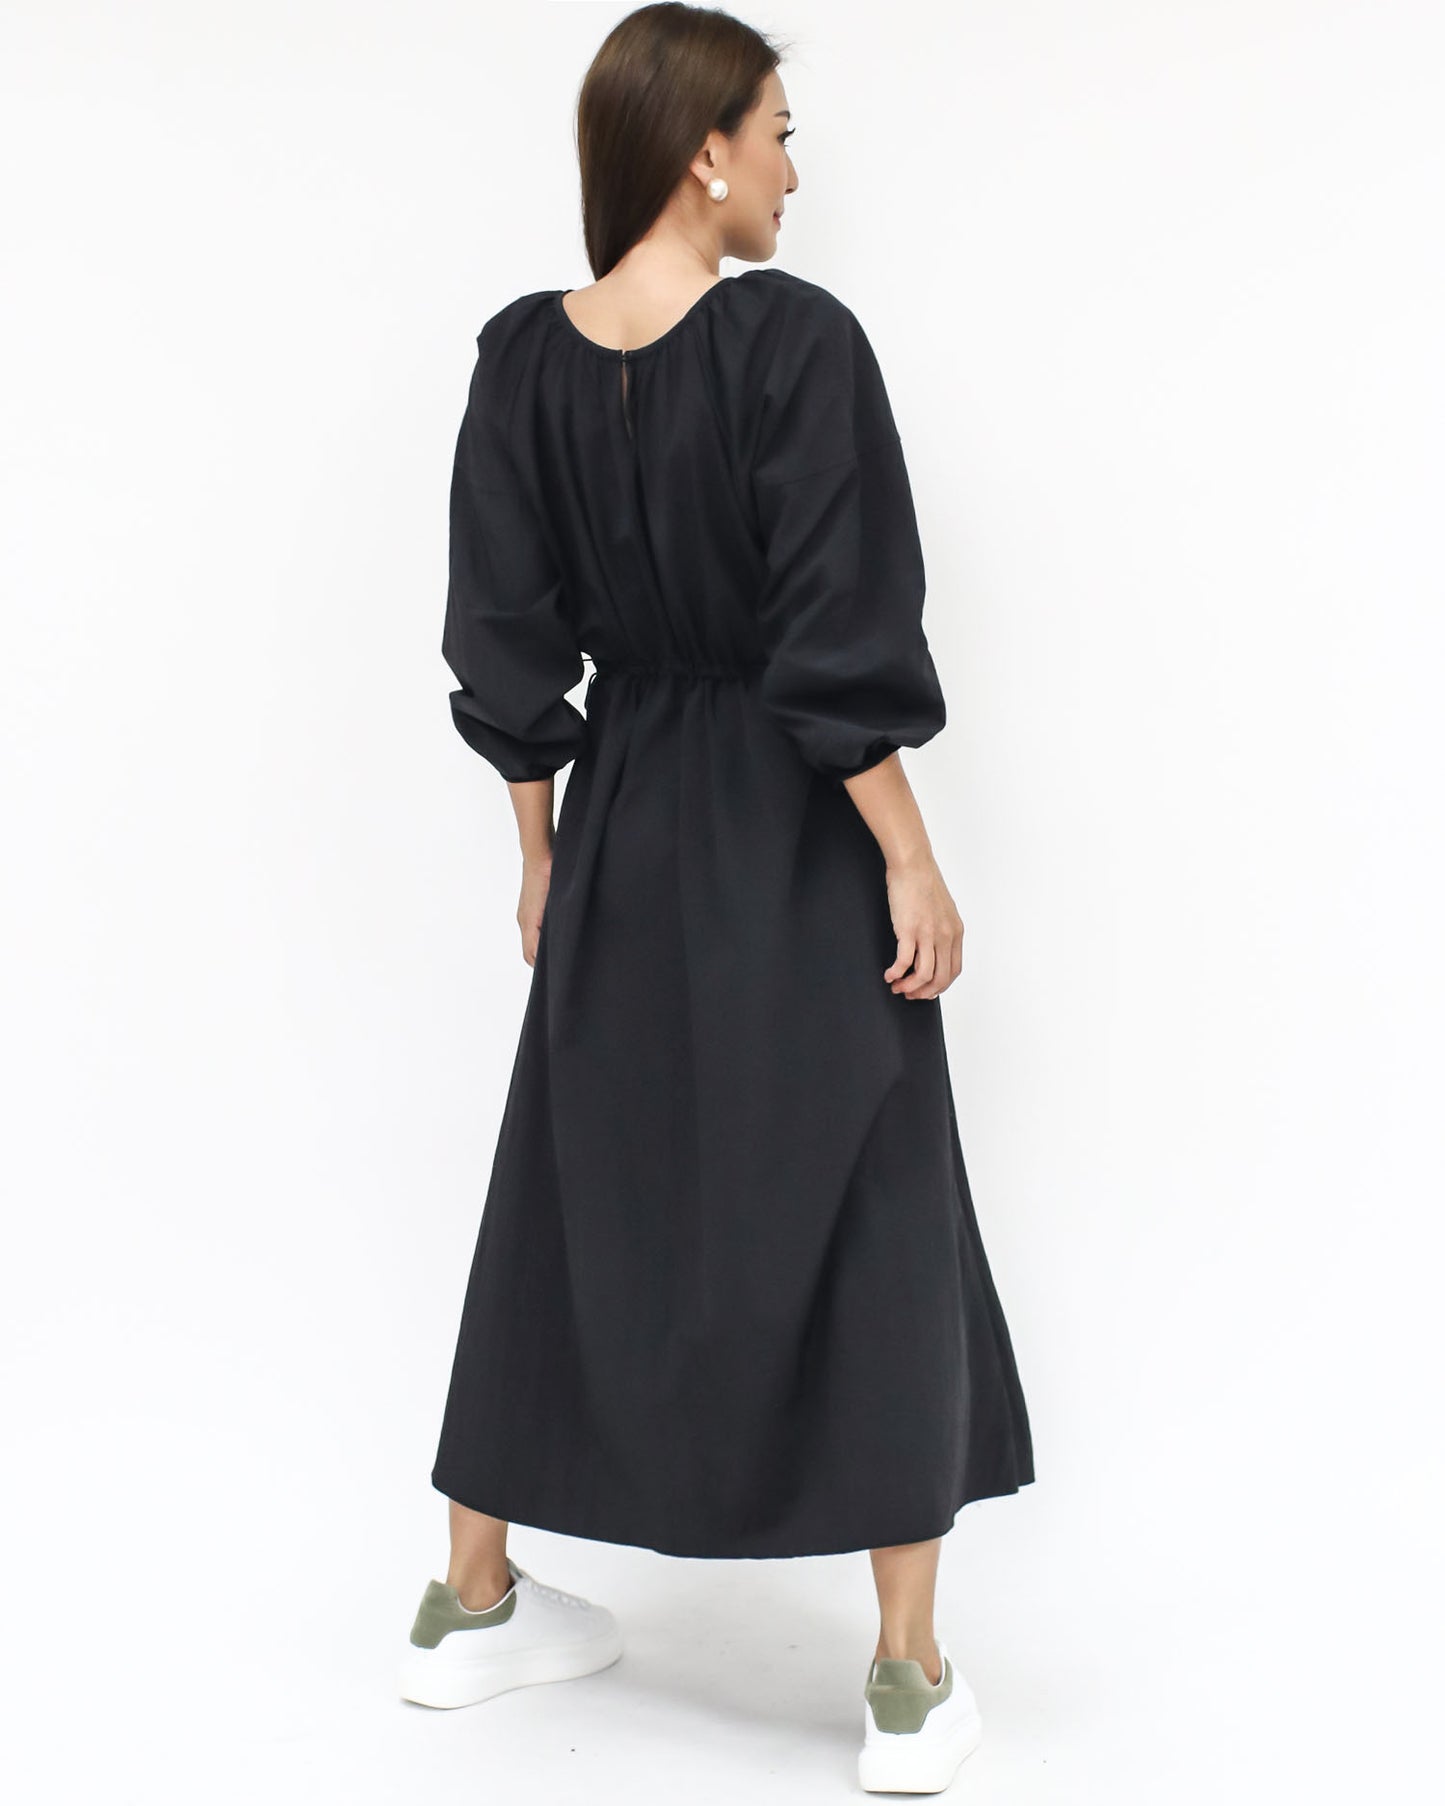 black tech flare dress – STYLEGAL